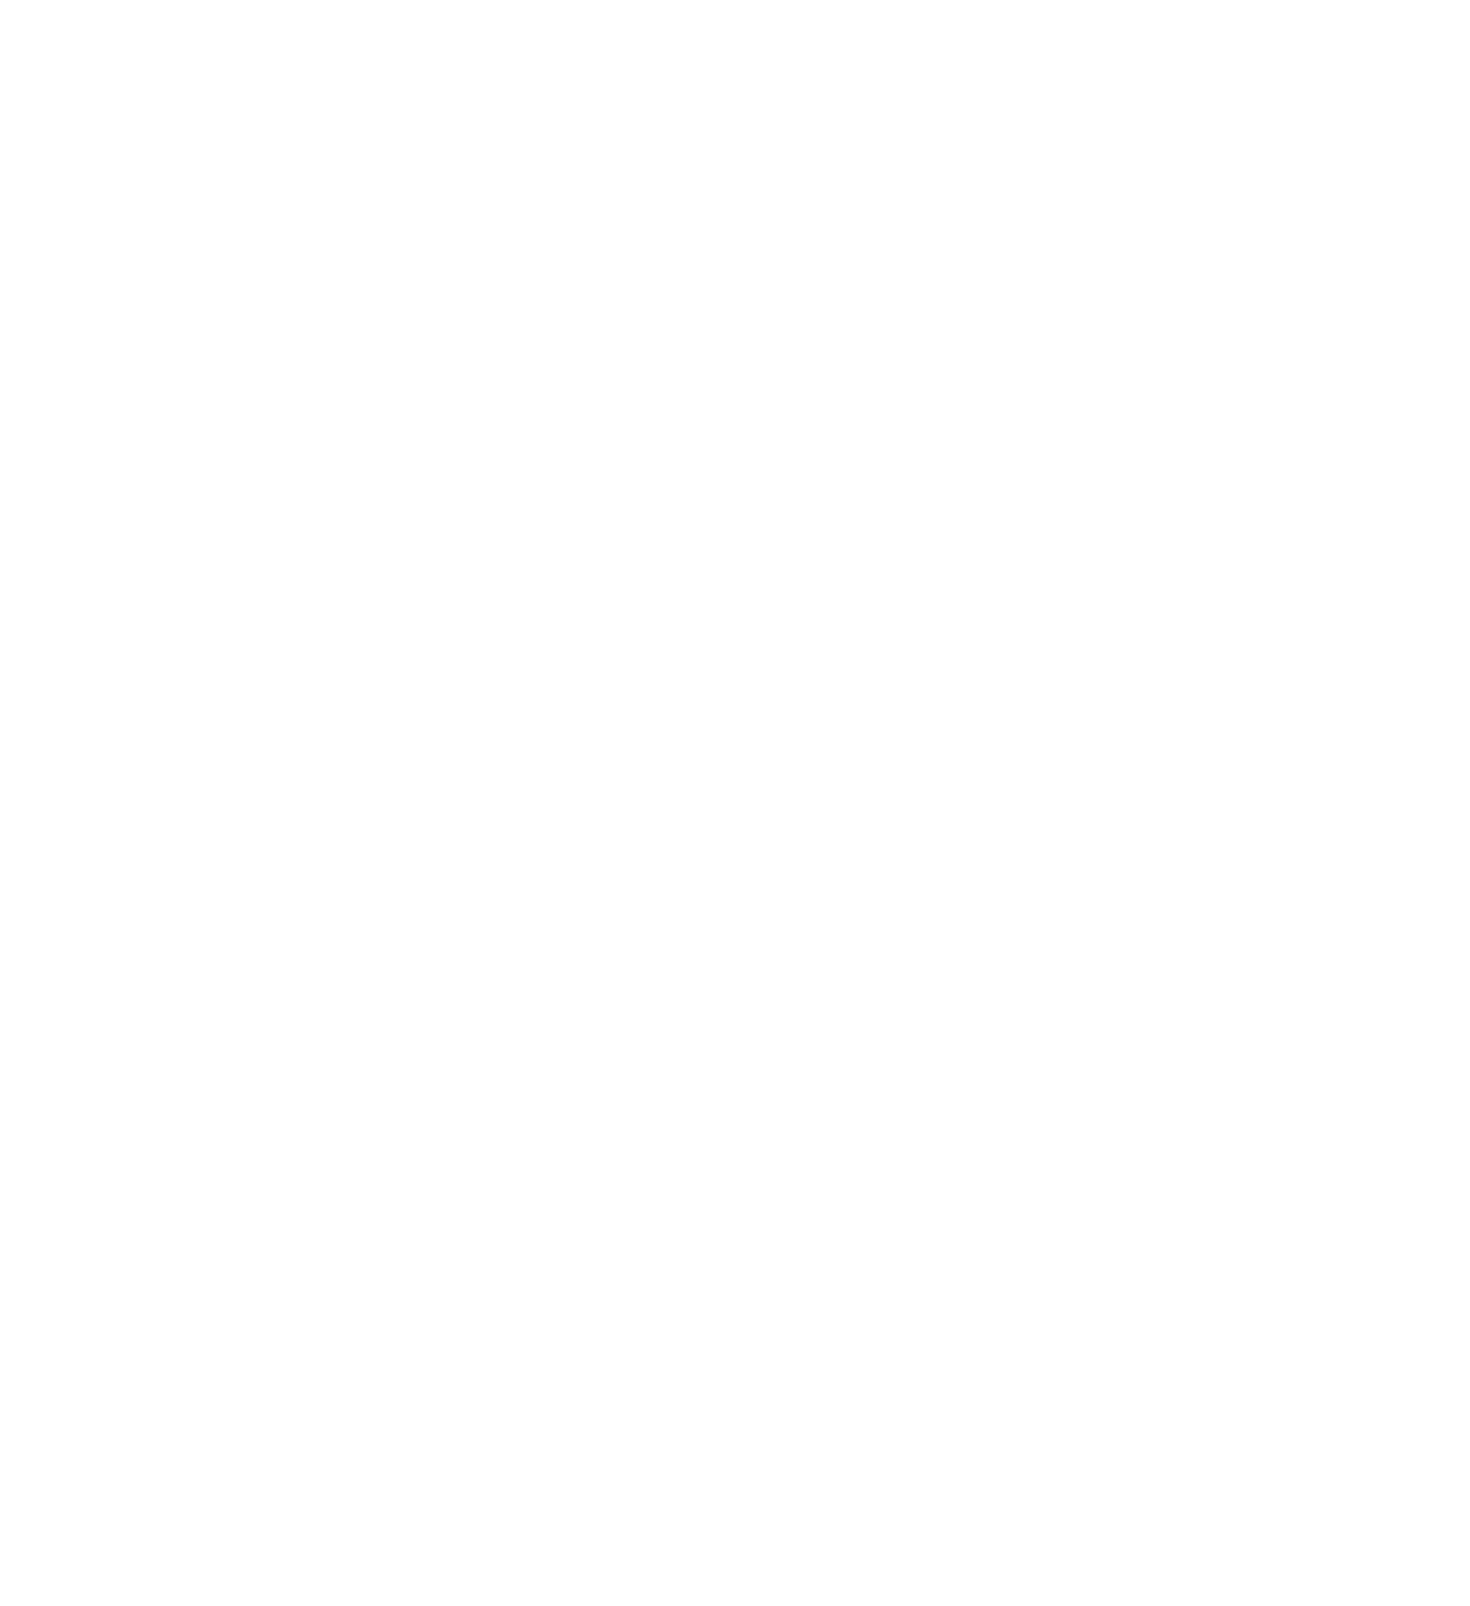 AdTheorent logo pour fonds sombres (PNG transparent)